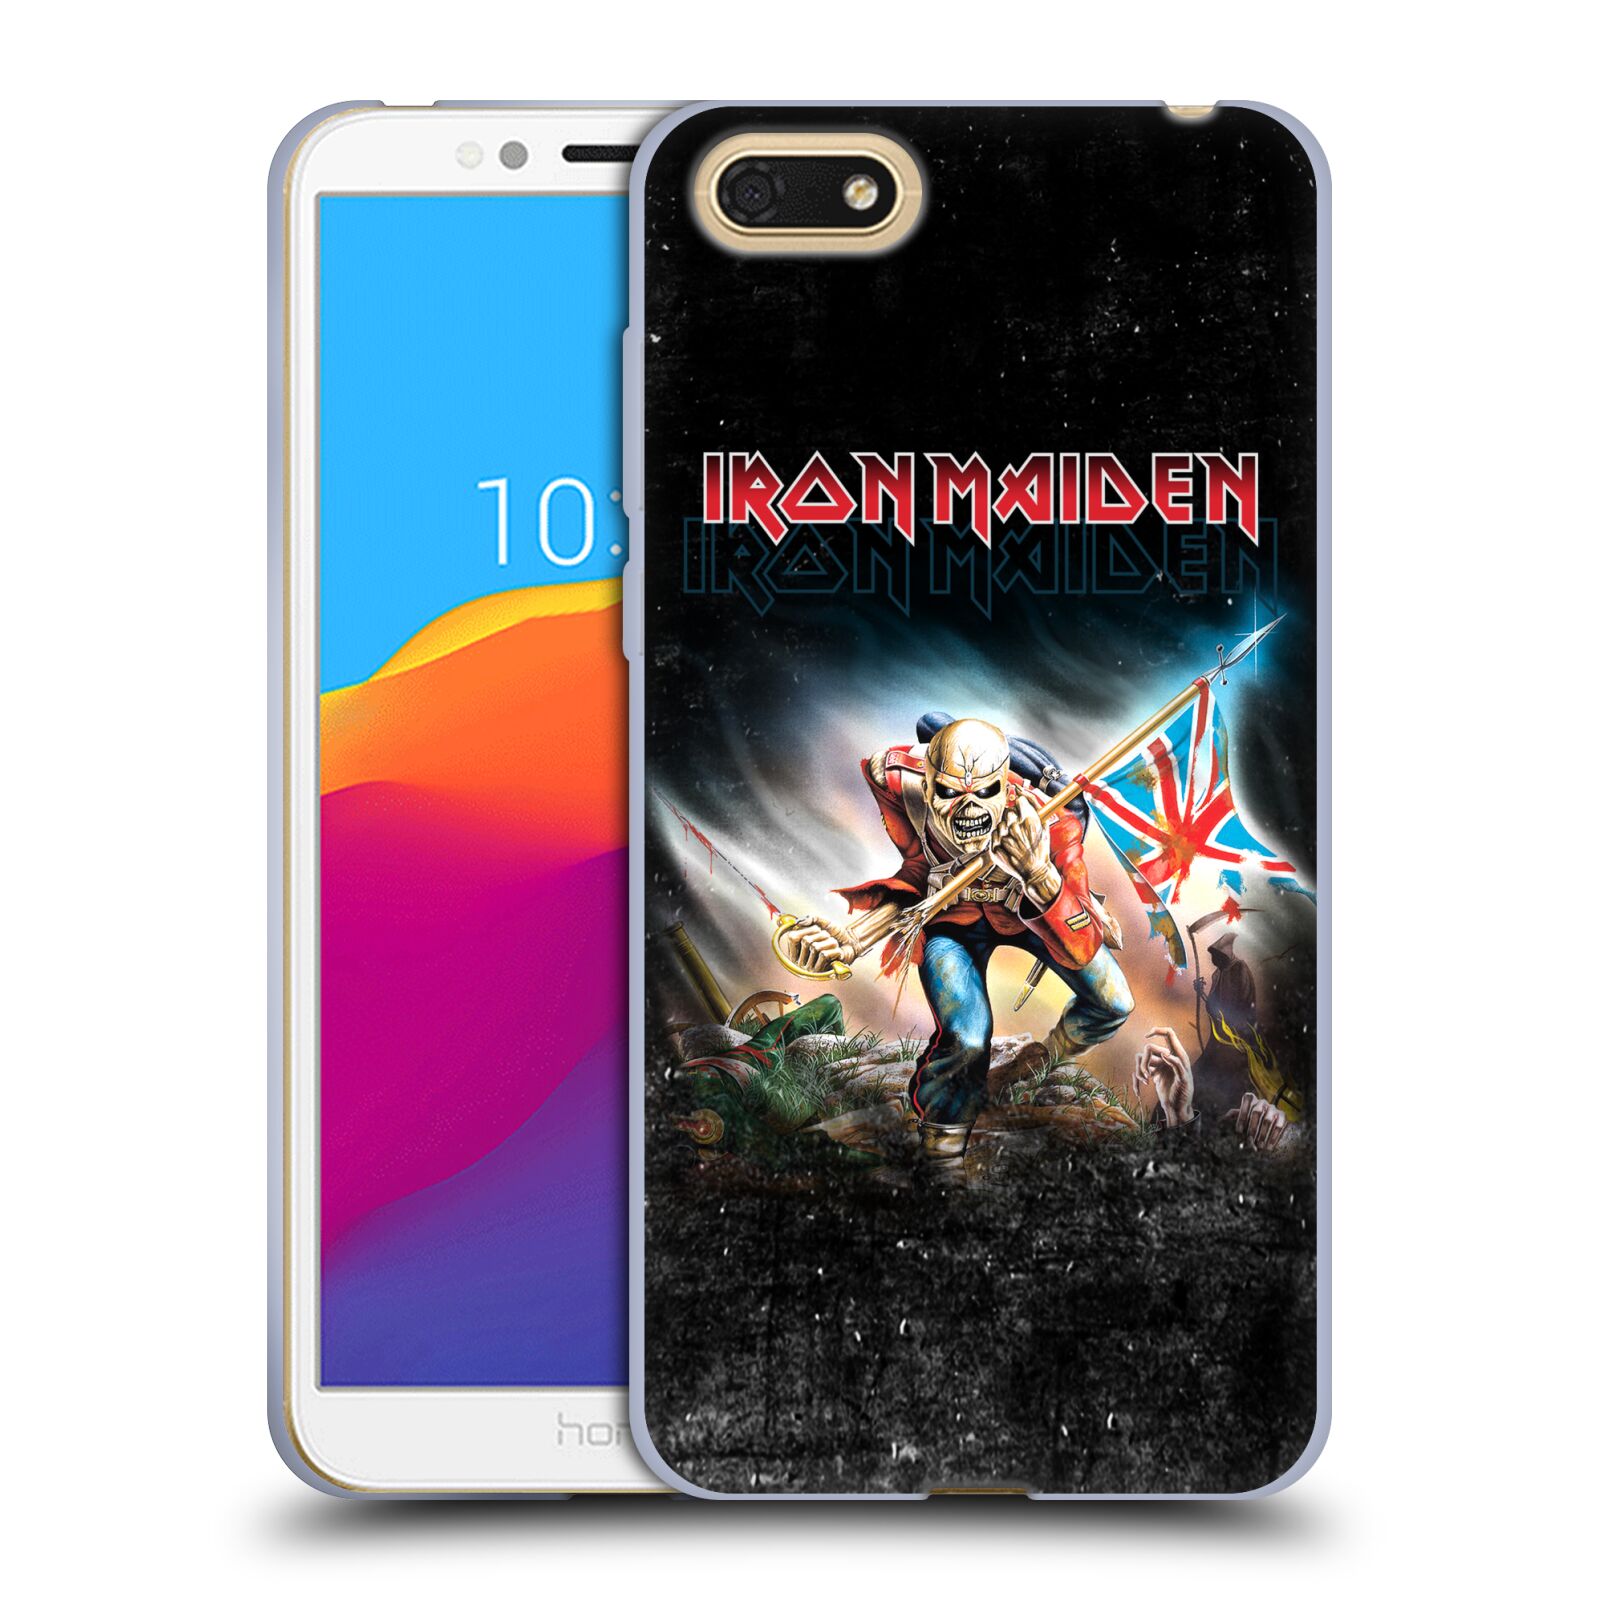 Silikonové pouzdro na mobil Honor 7S - Head Case - Iron Maiden - Trooper 2016 (Silikonový kryt, obal, pouzdro na mobilní telefon Huawei Honor 7S s motivem Iron Maiden - Trooper 2016)